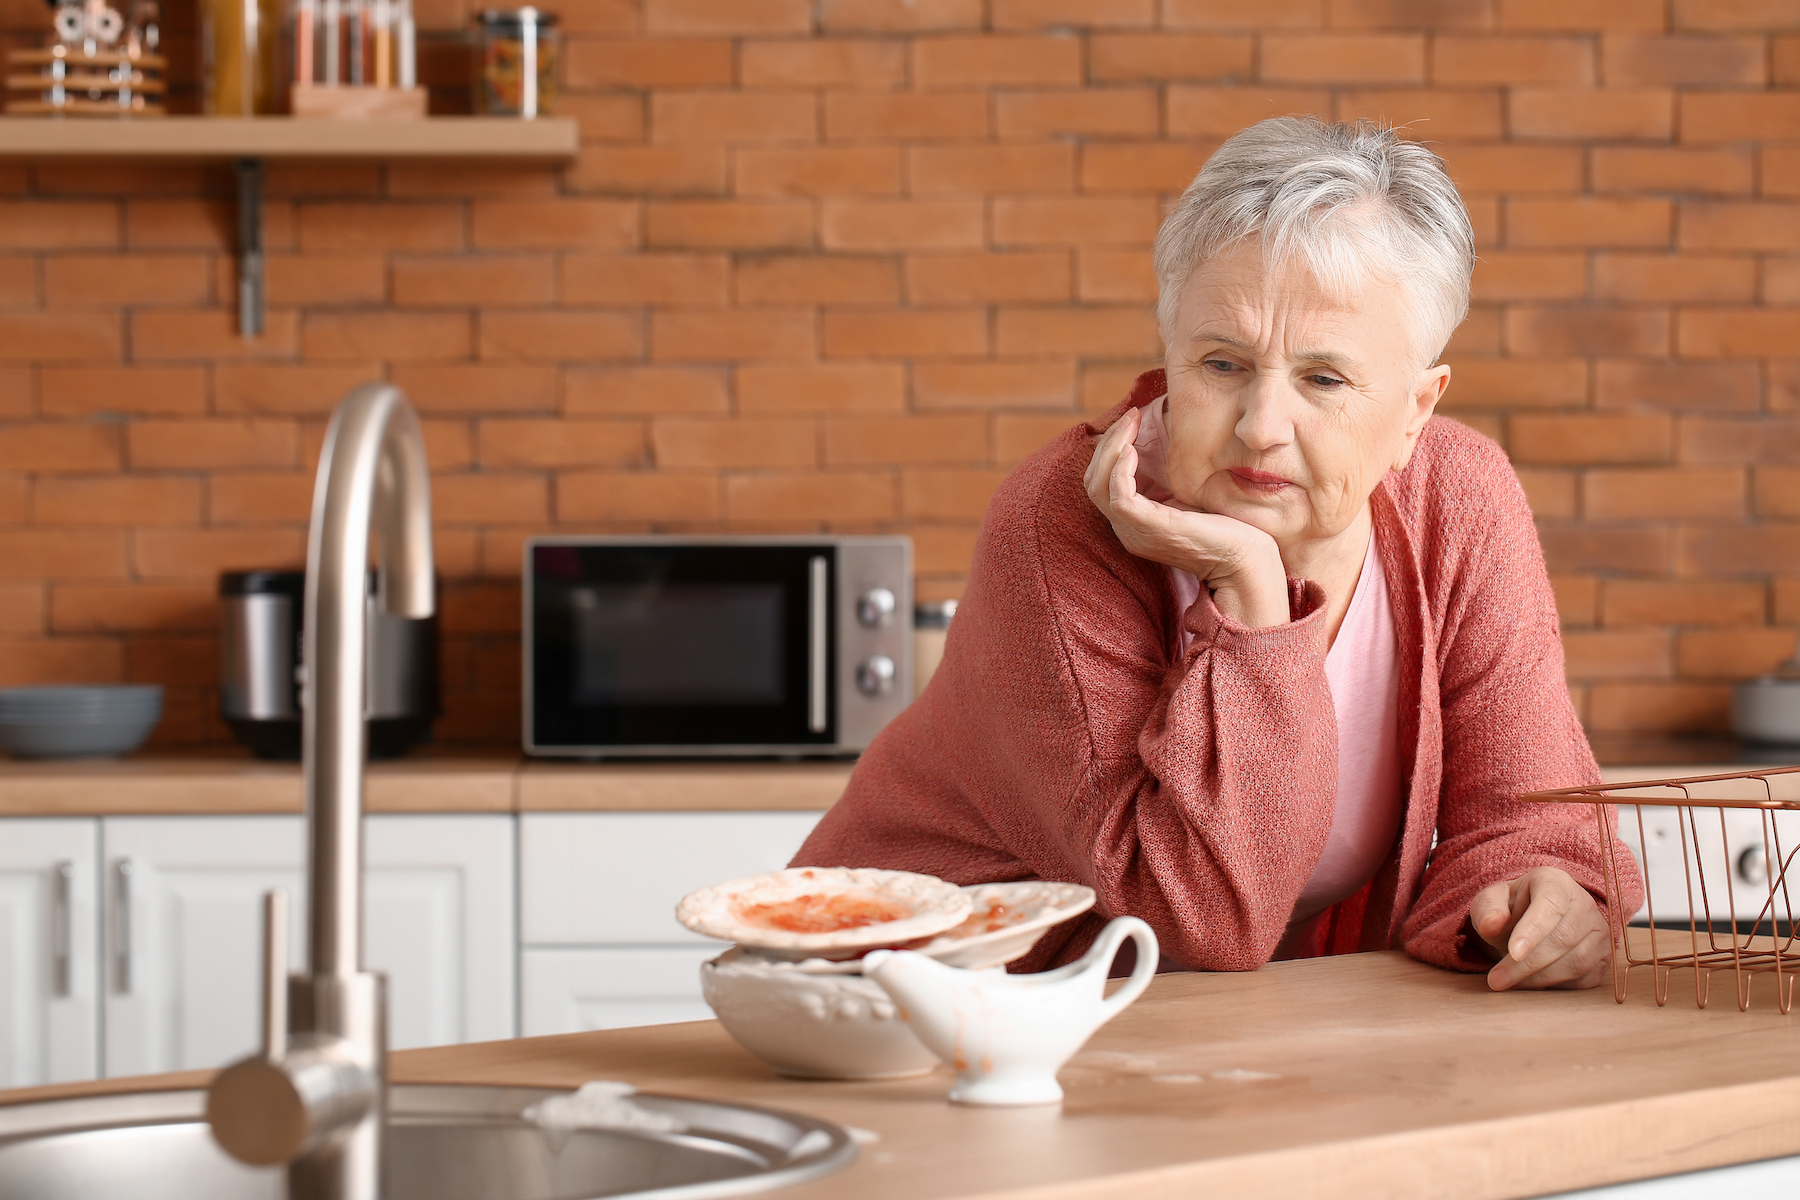 Seven tips for caring for elderly parents